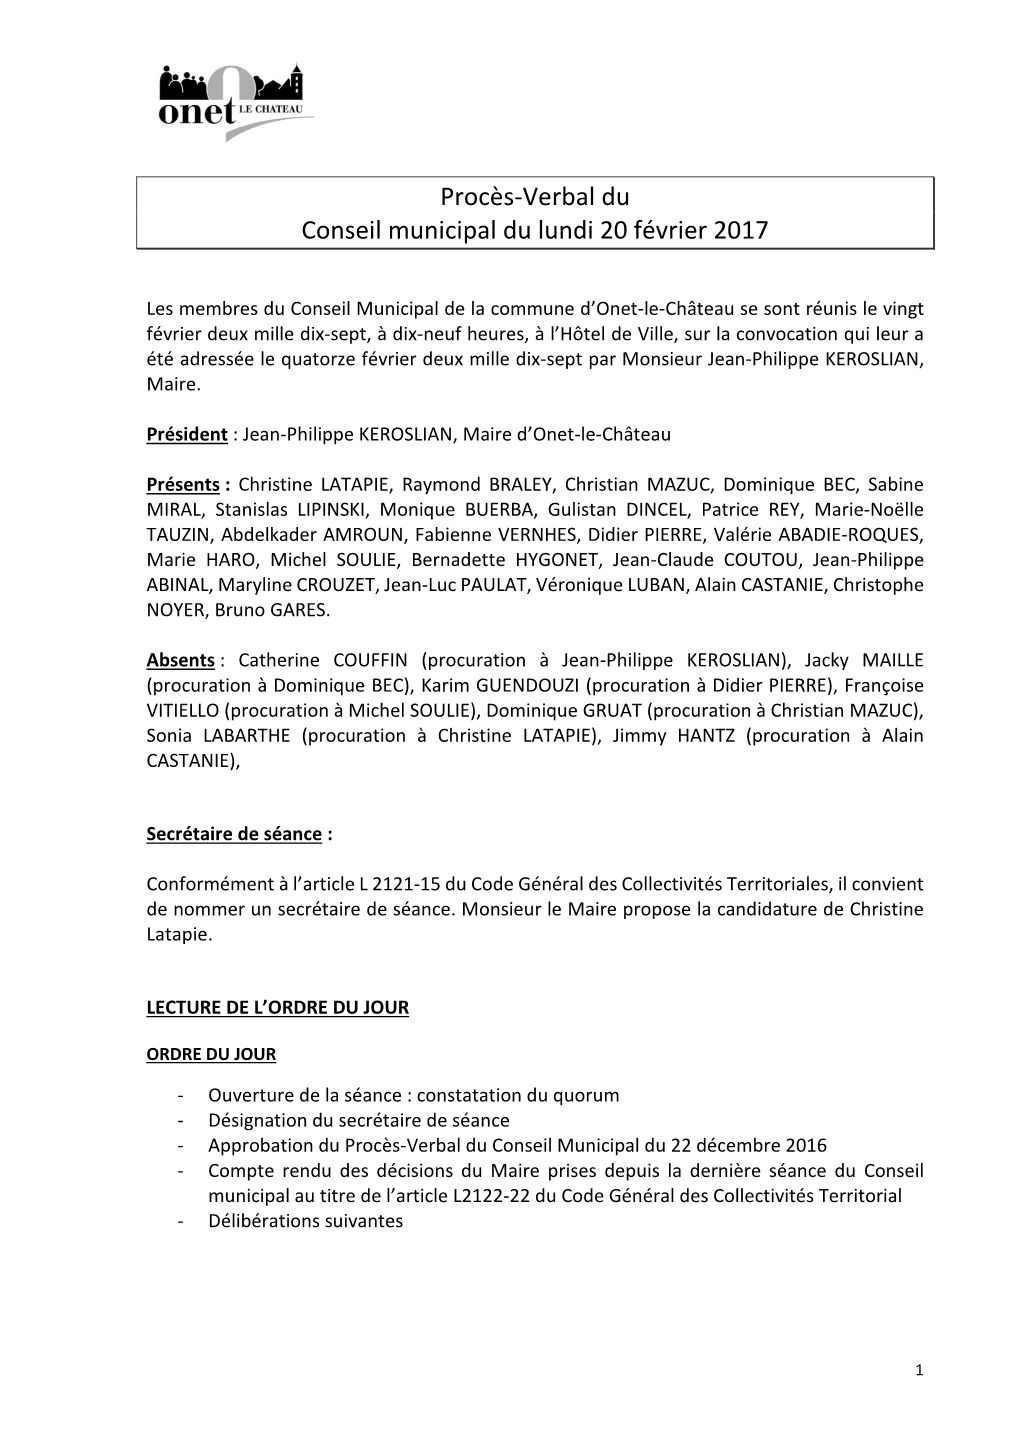 Procès-Verbal Du Conseil Municipal Du Lundi 20 Février 2017